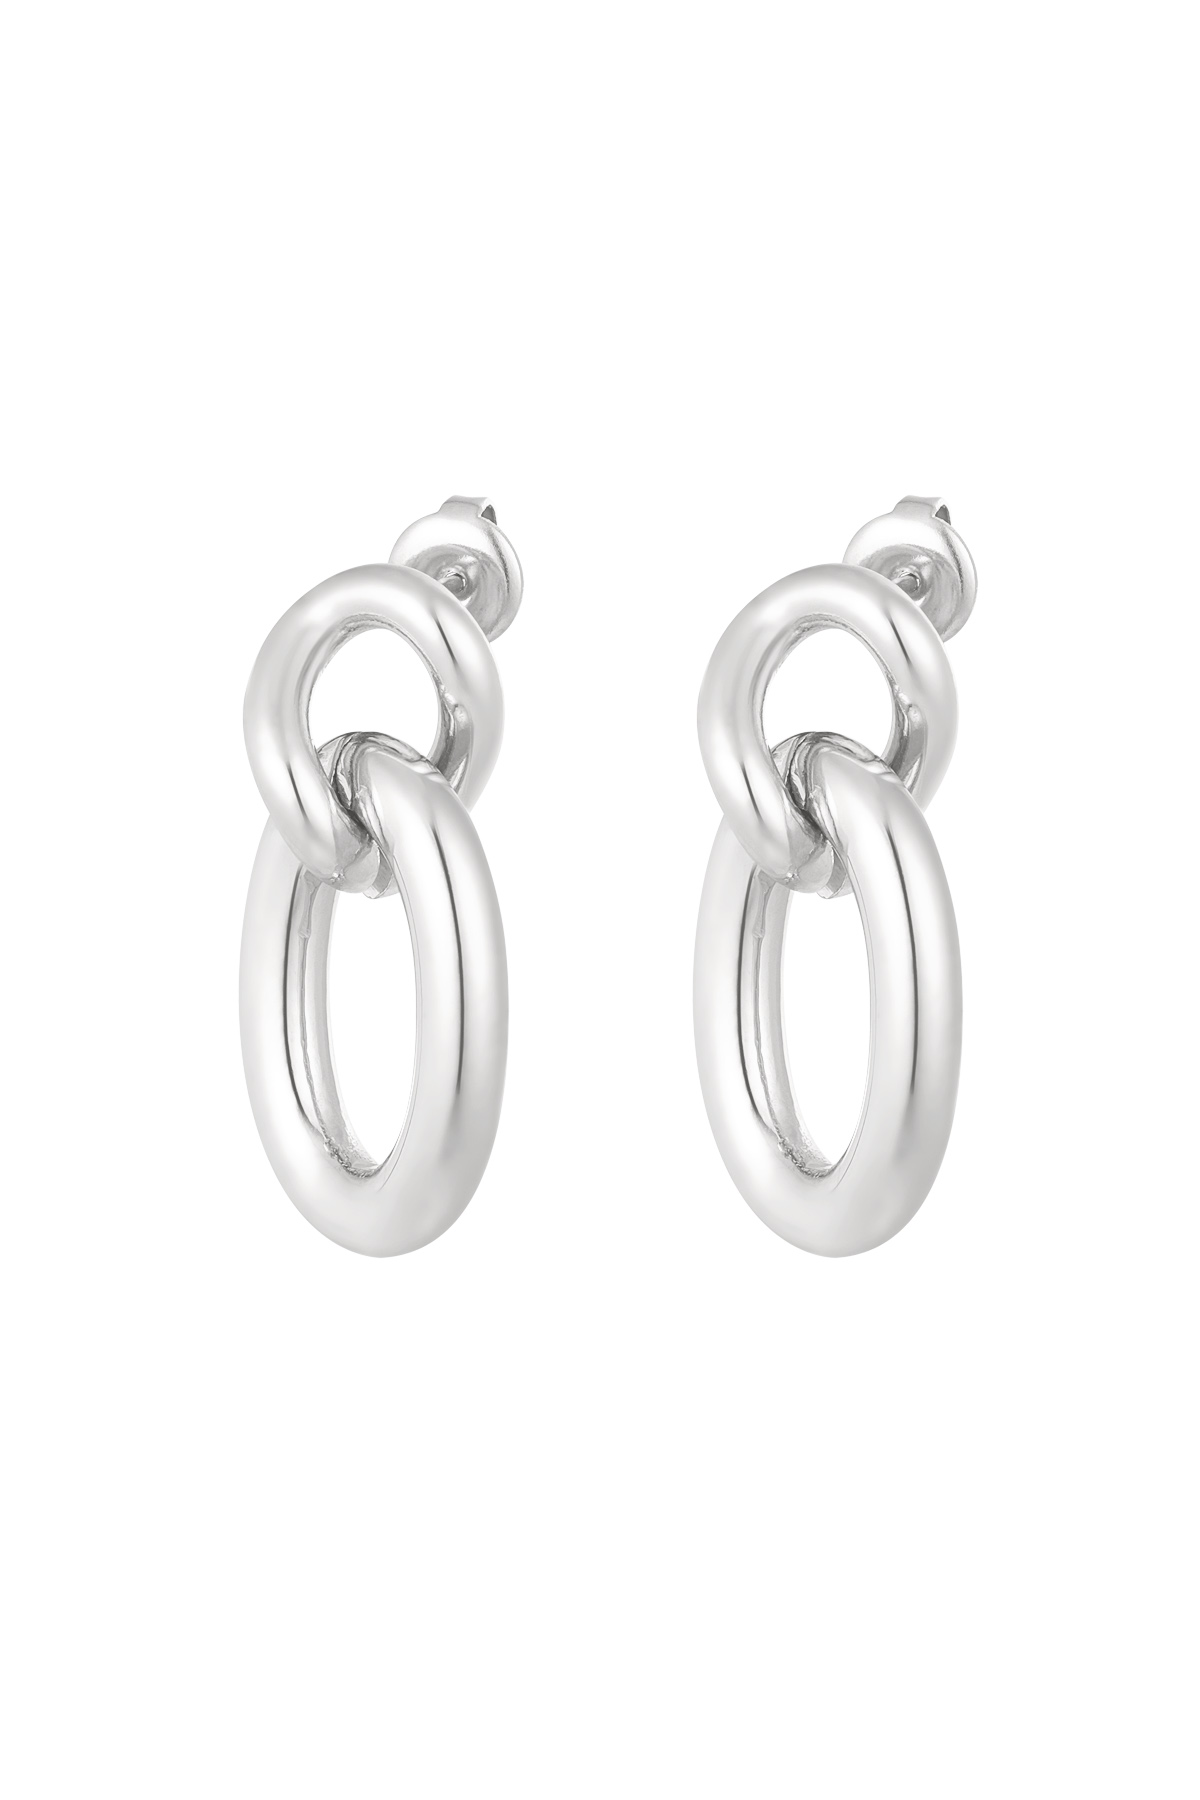 Earrings links - silver h5 